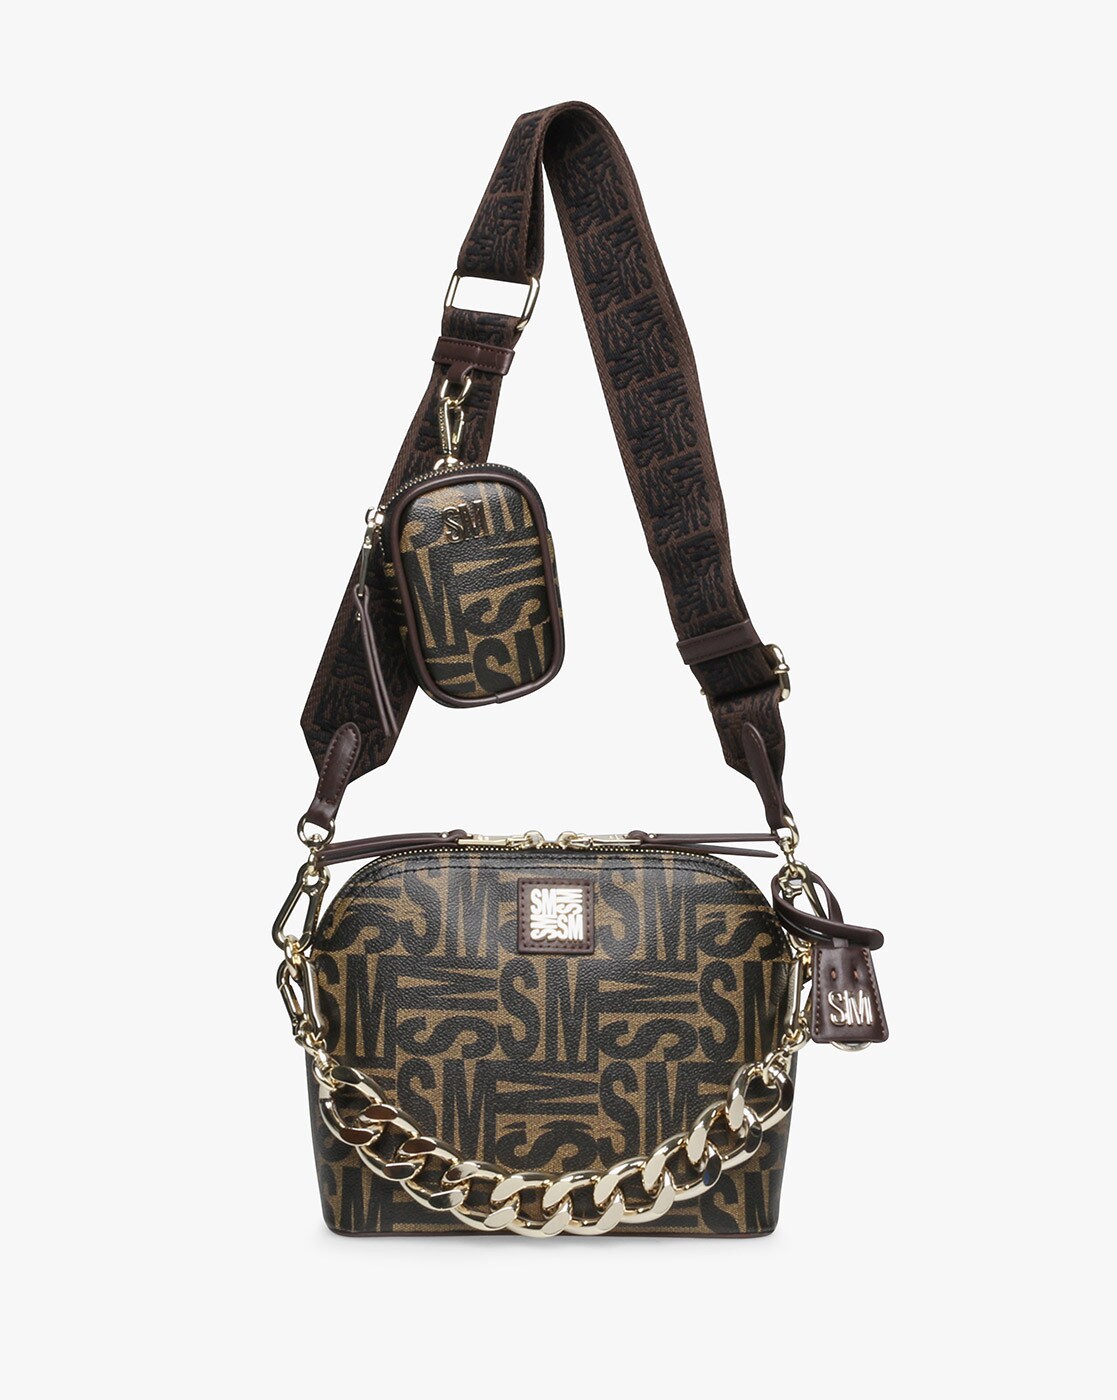 Steve Madden Women's Beautiful Classic Brown Purse Backpack | eBay